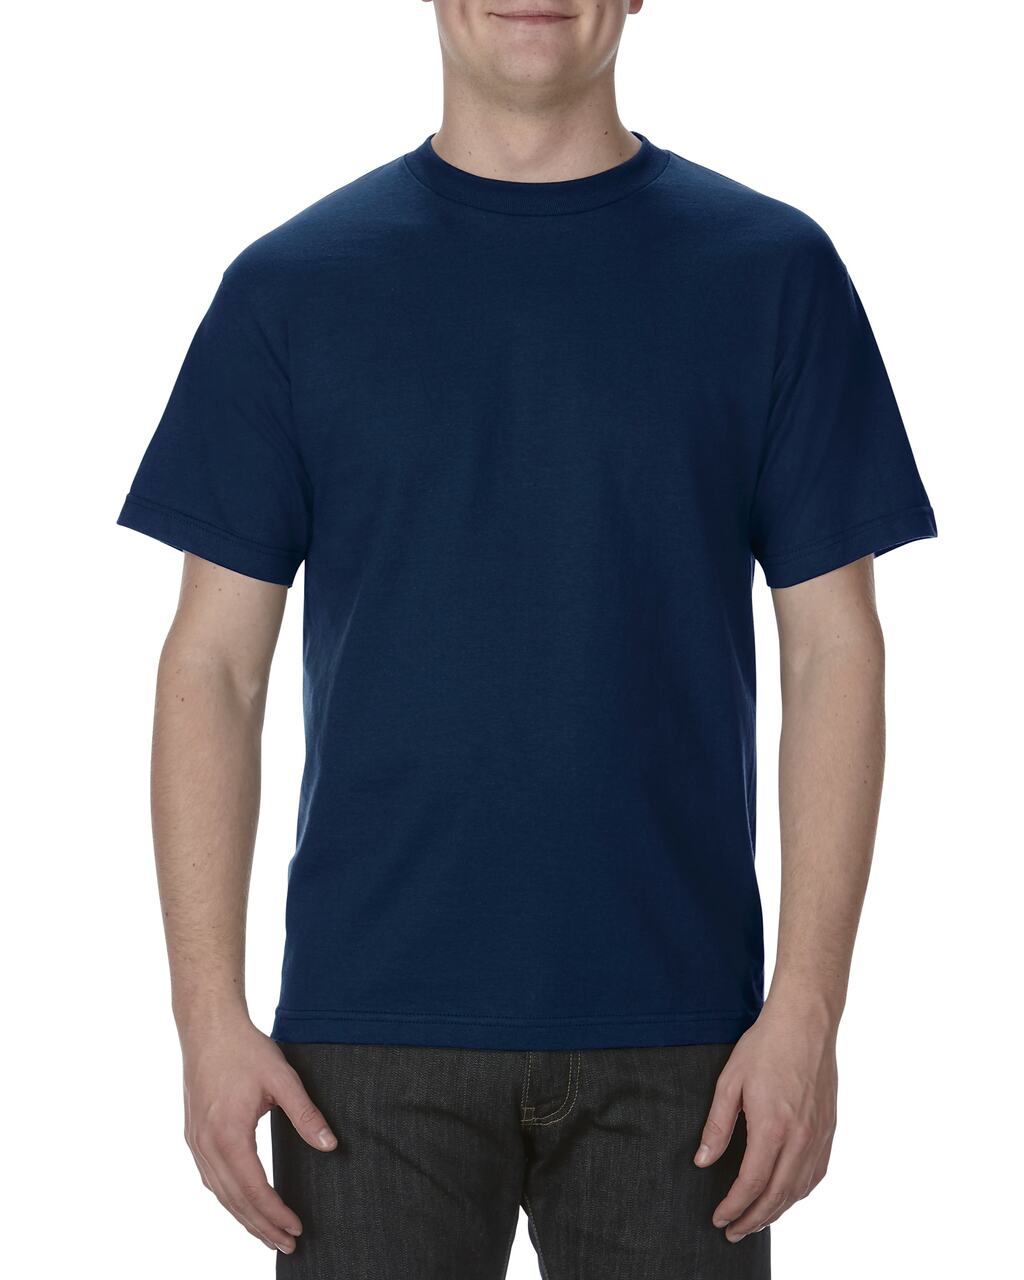 American Apparel Adult T-Shirt